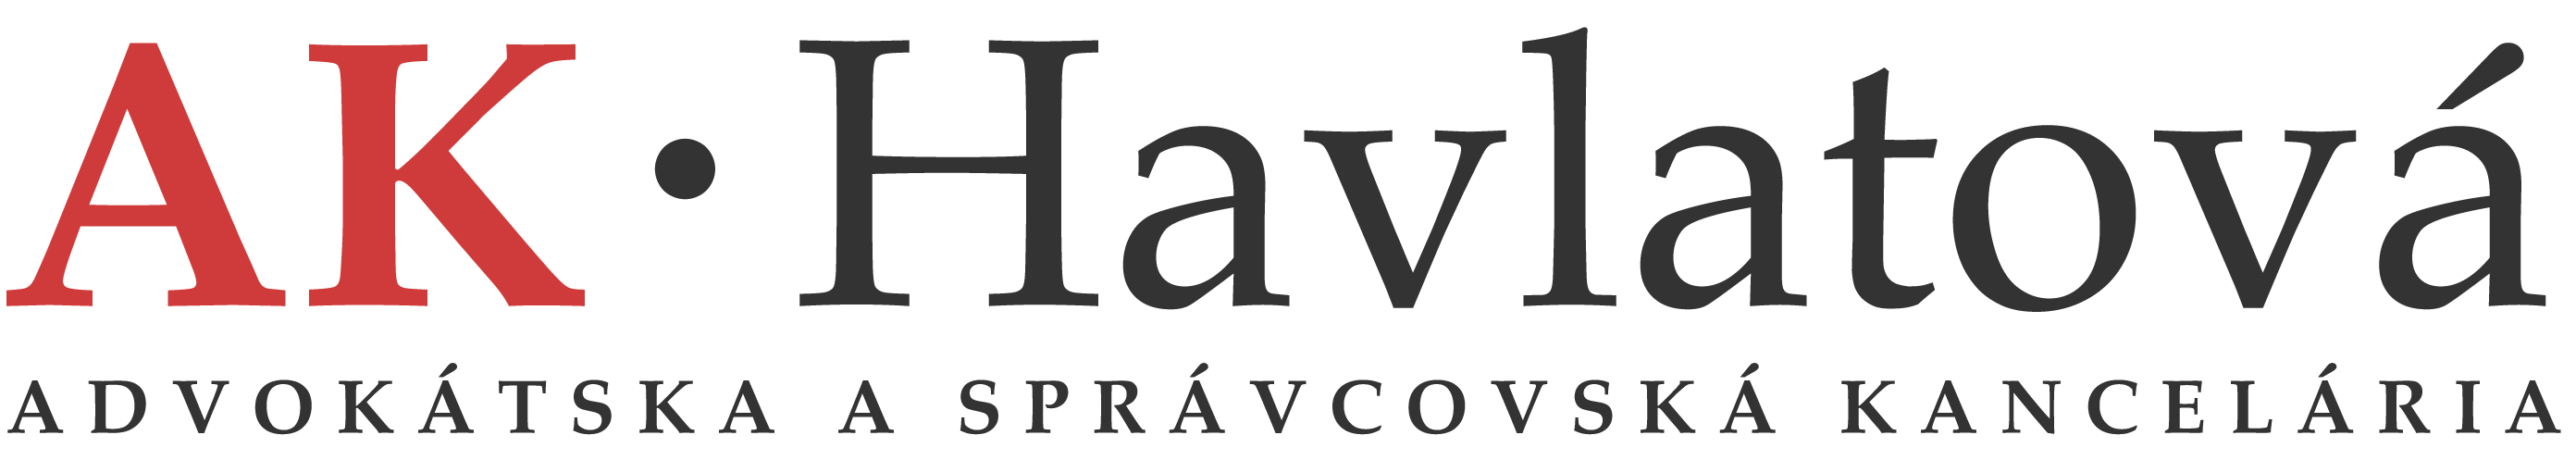 havlatova logo